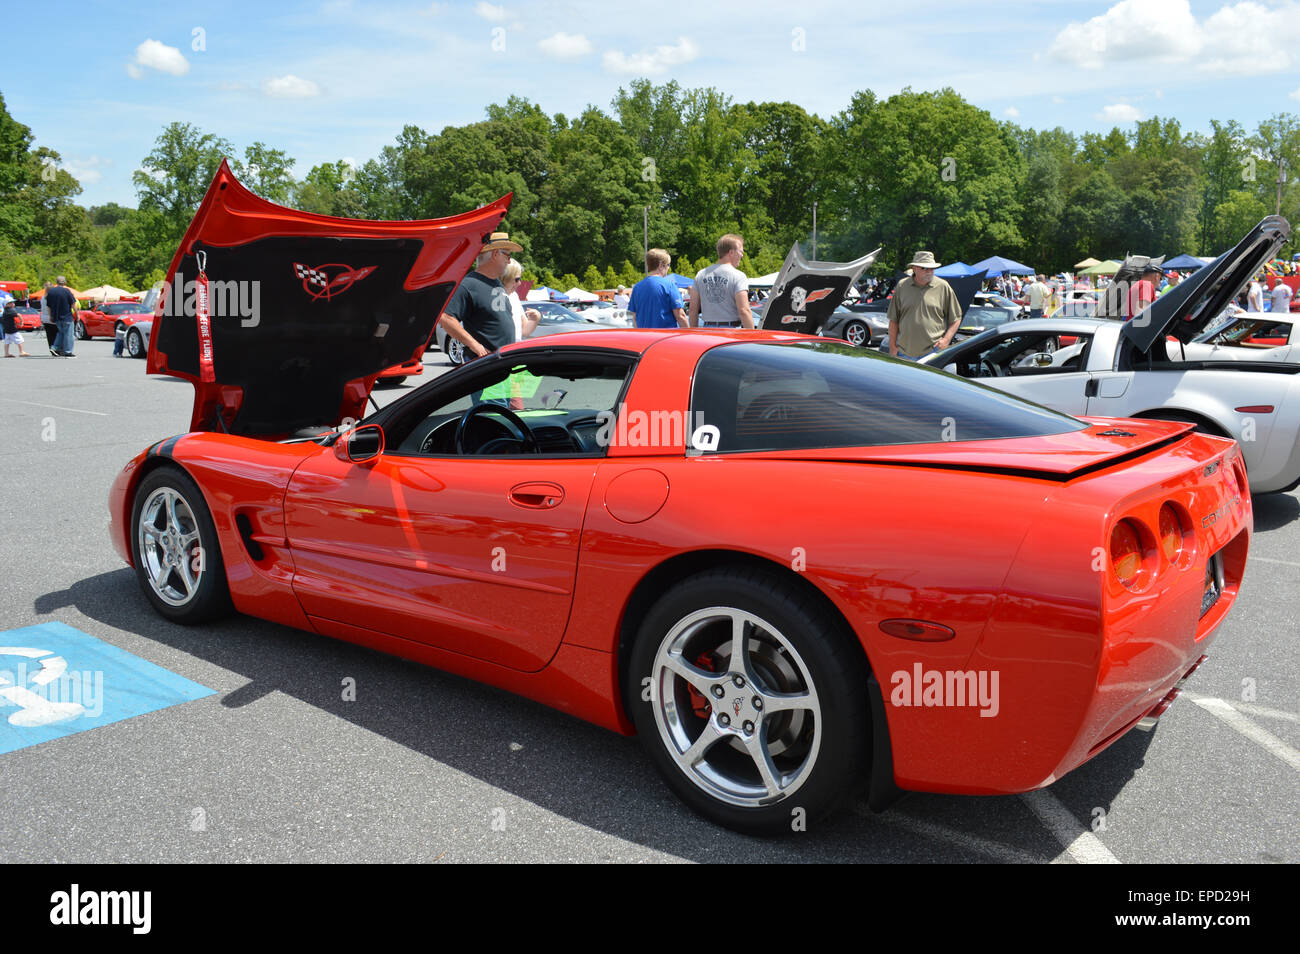 A C5 Corvette at a local car show. Stock Photo